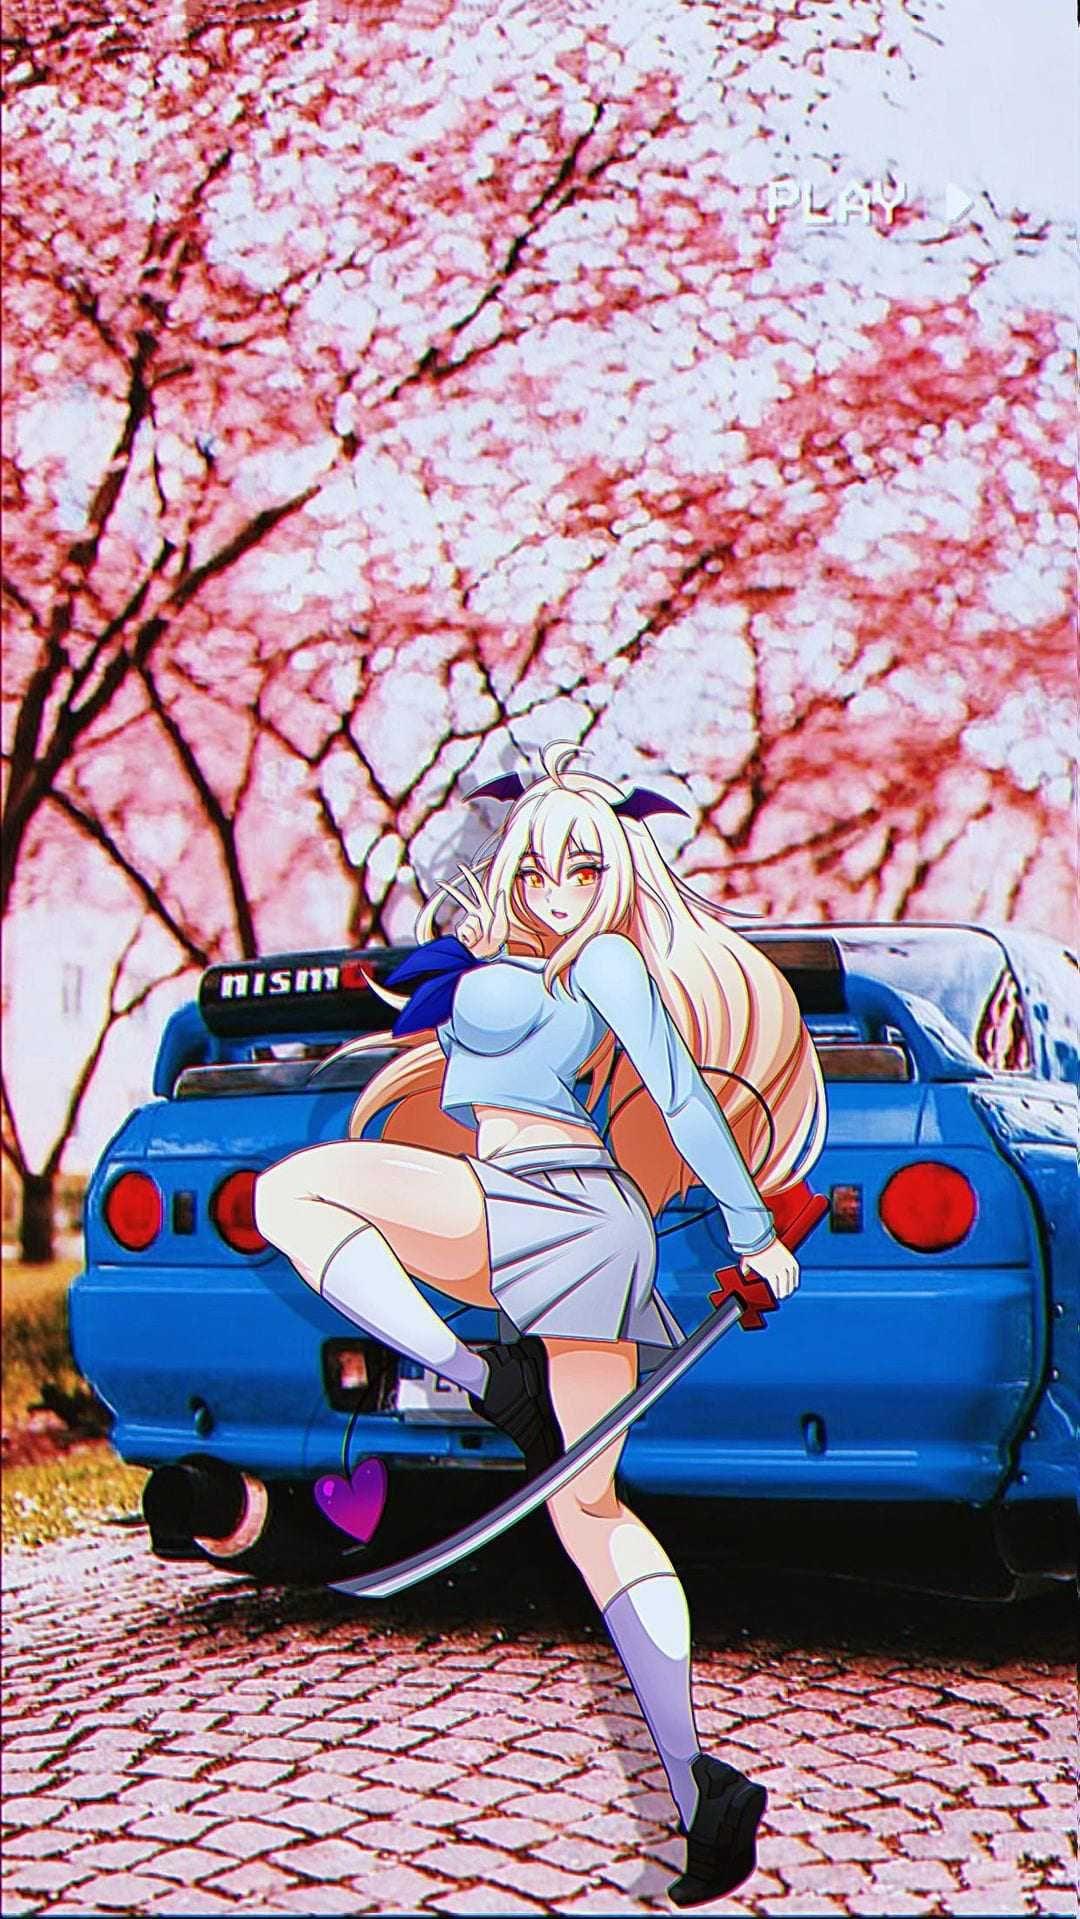 Anime and cars